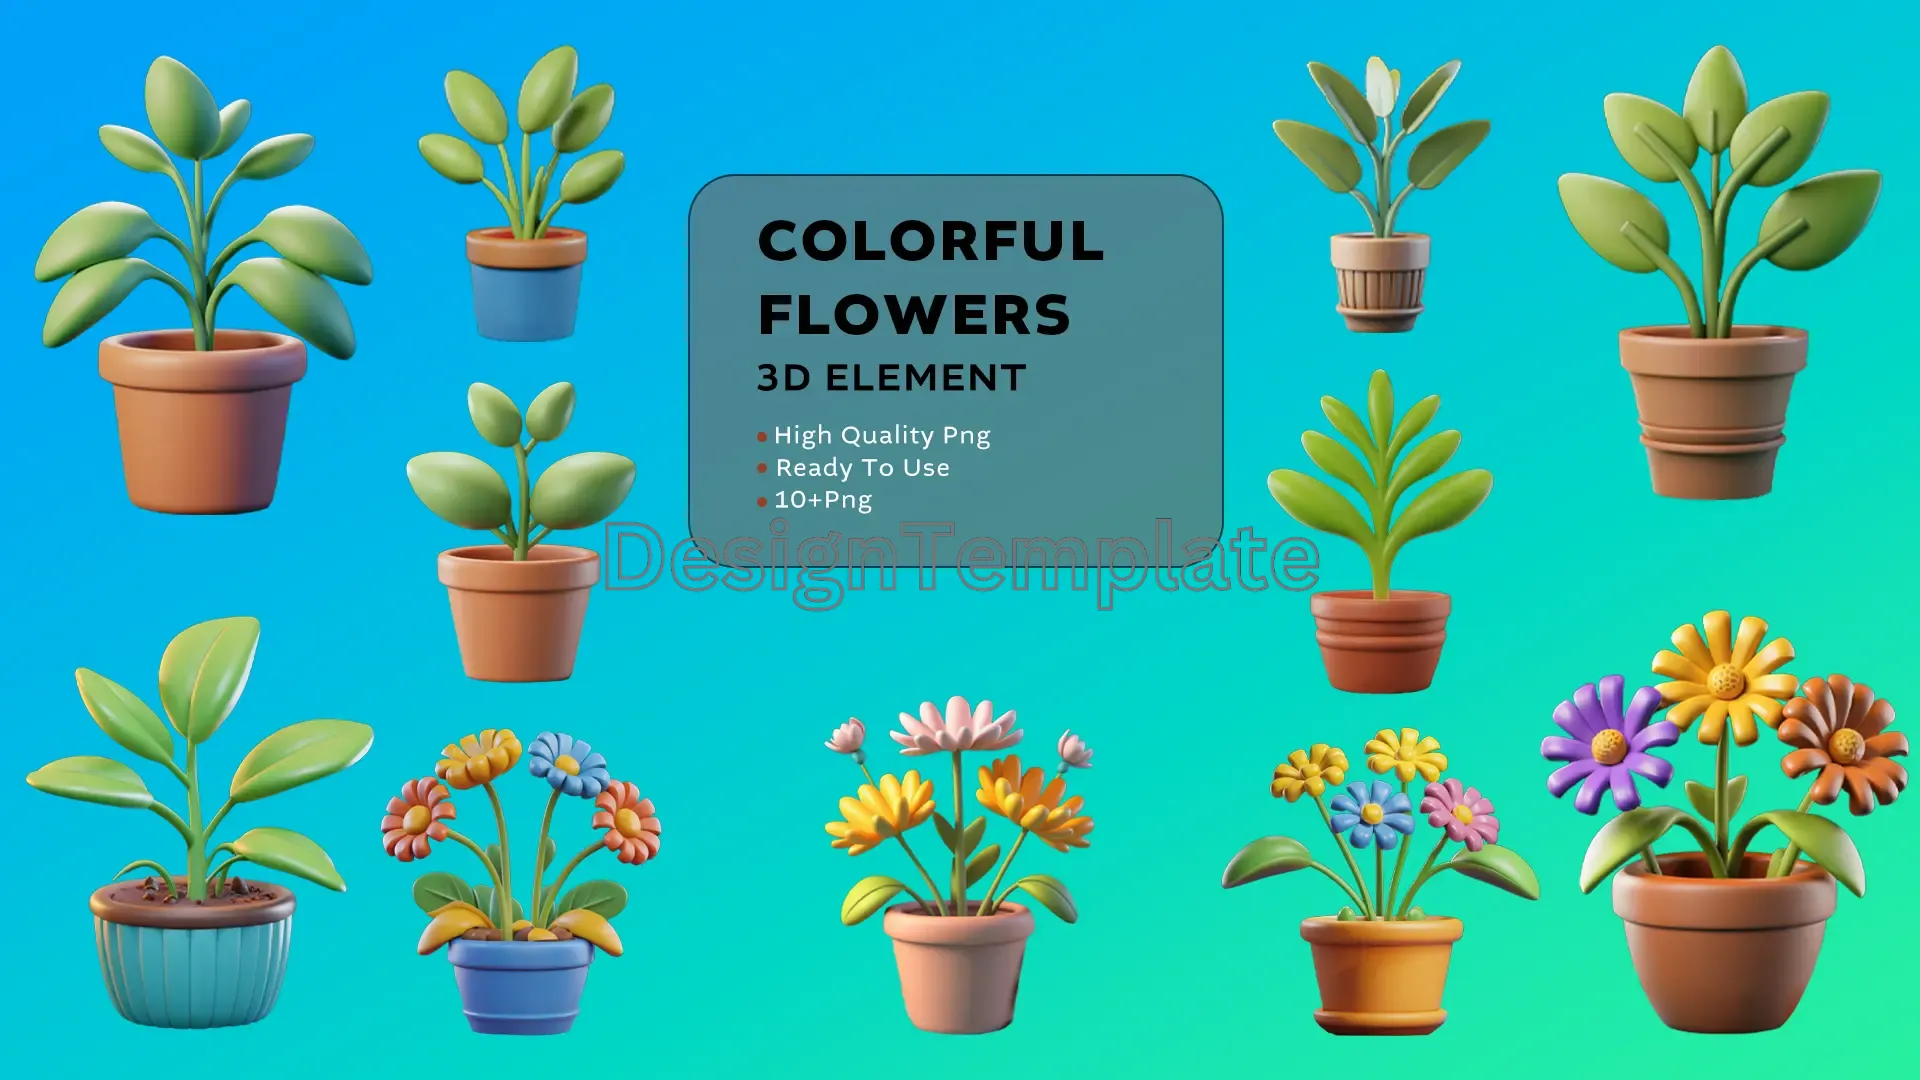 Flora Fiesta Vibrant 3D Colorful Flowers Elements Pack